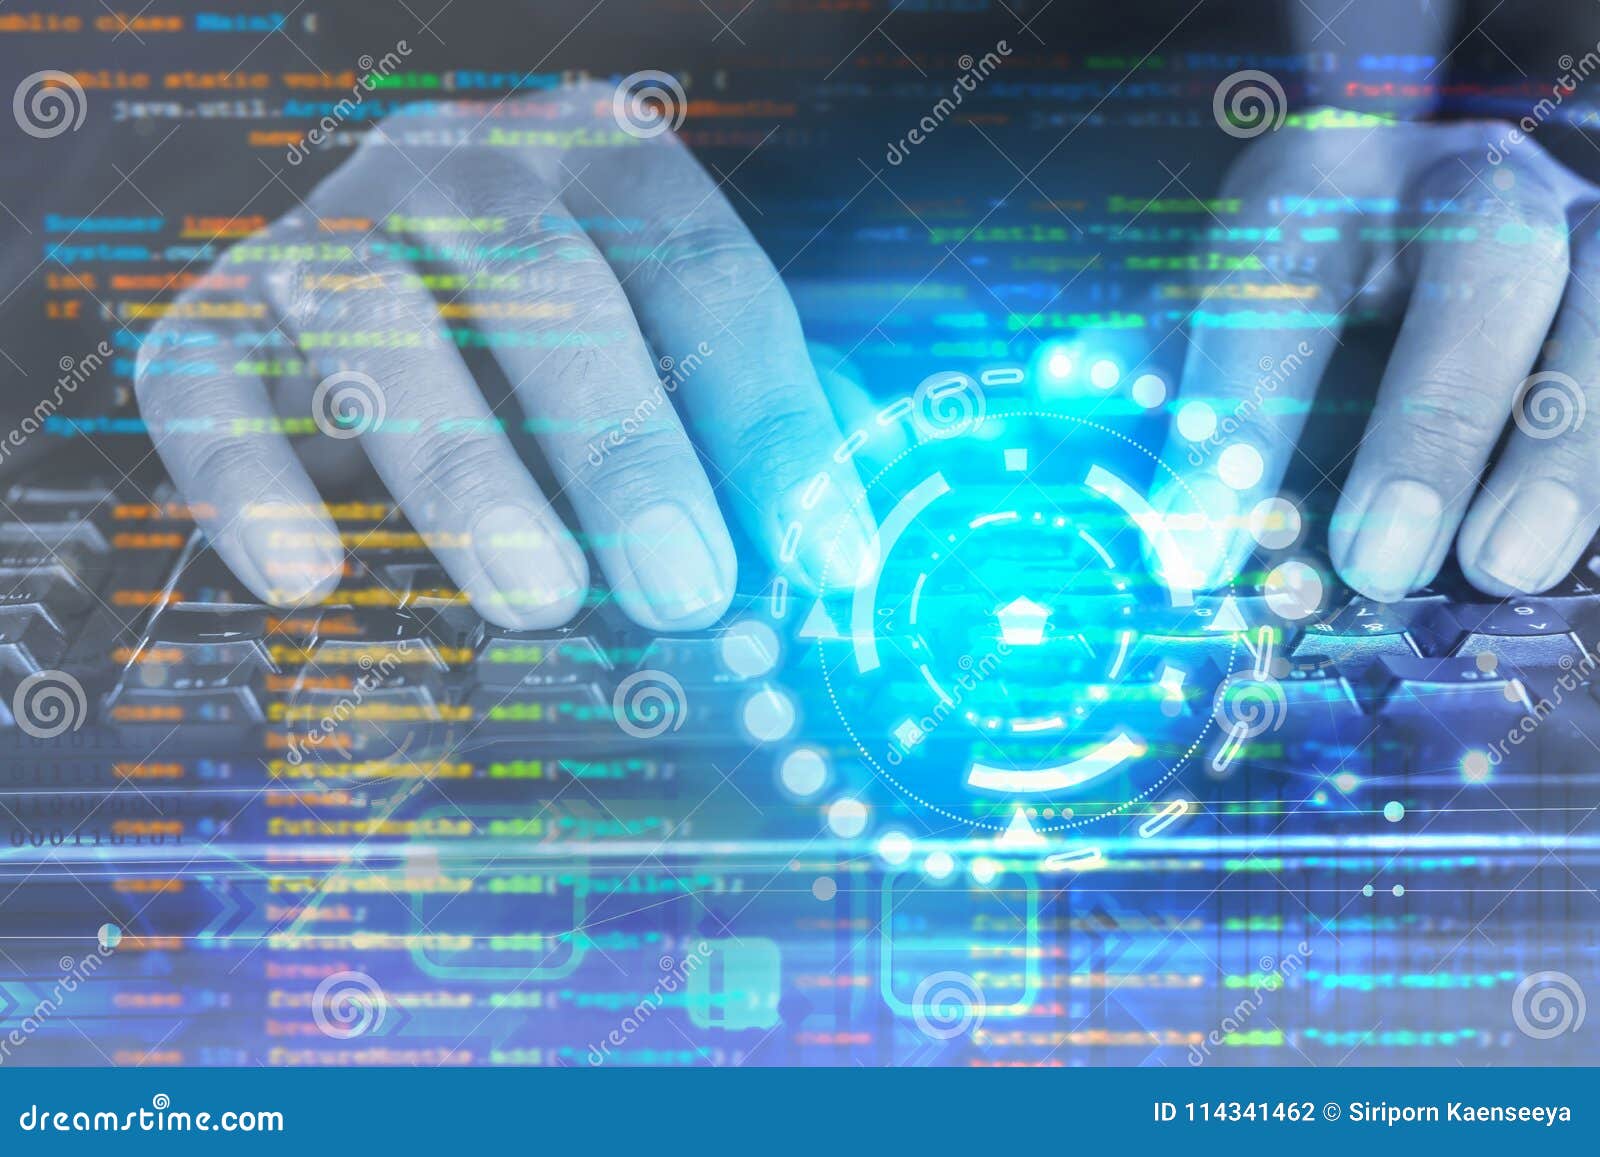 man hands programmer coding on computer keyboard